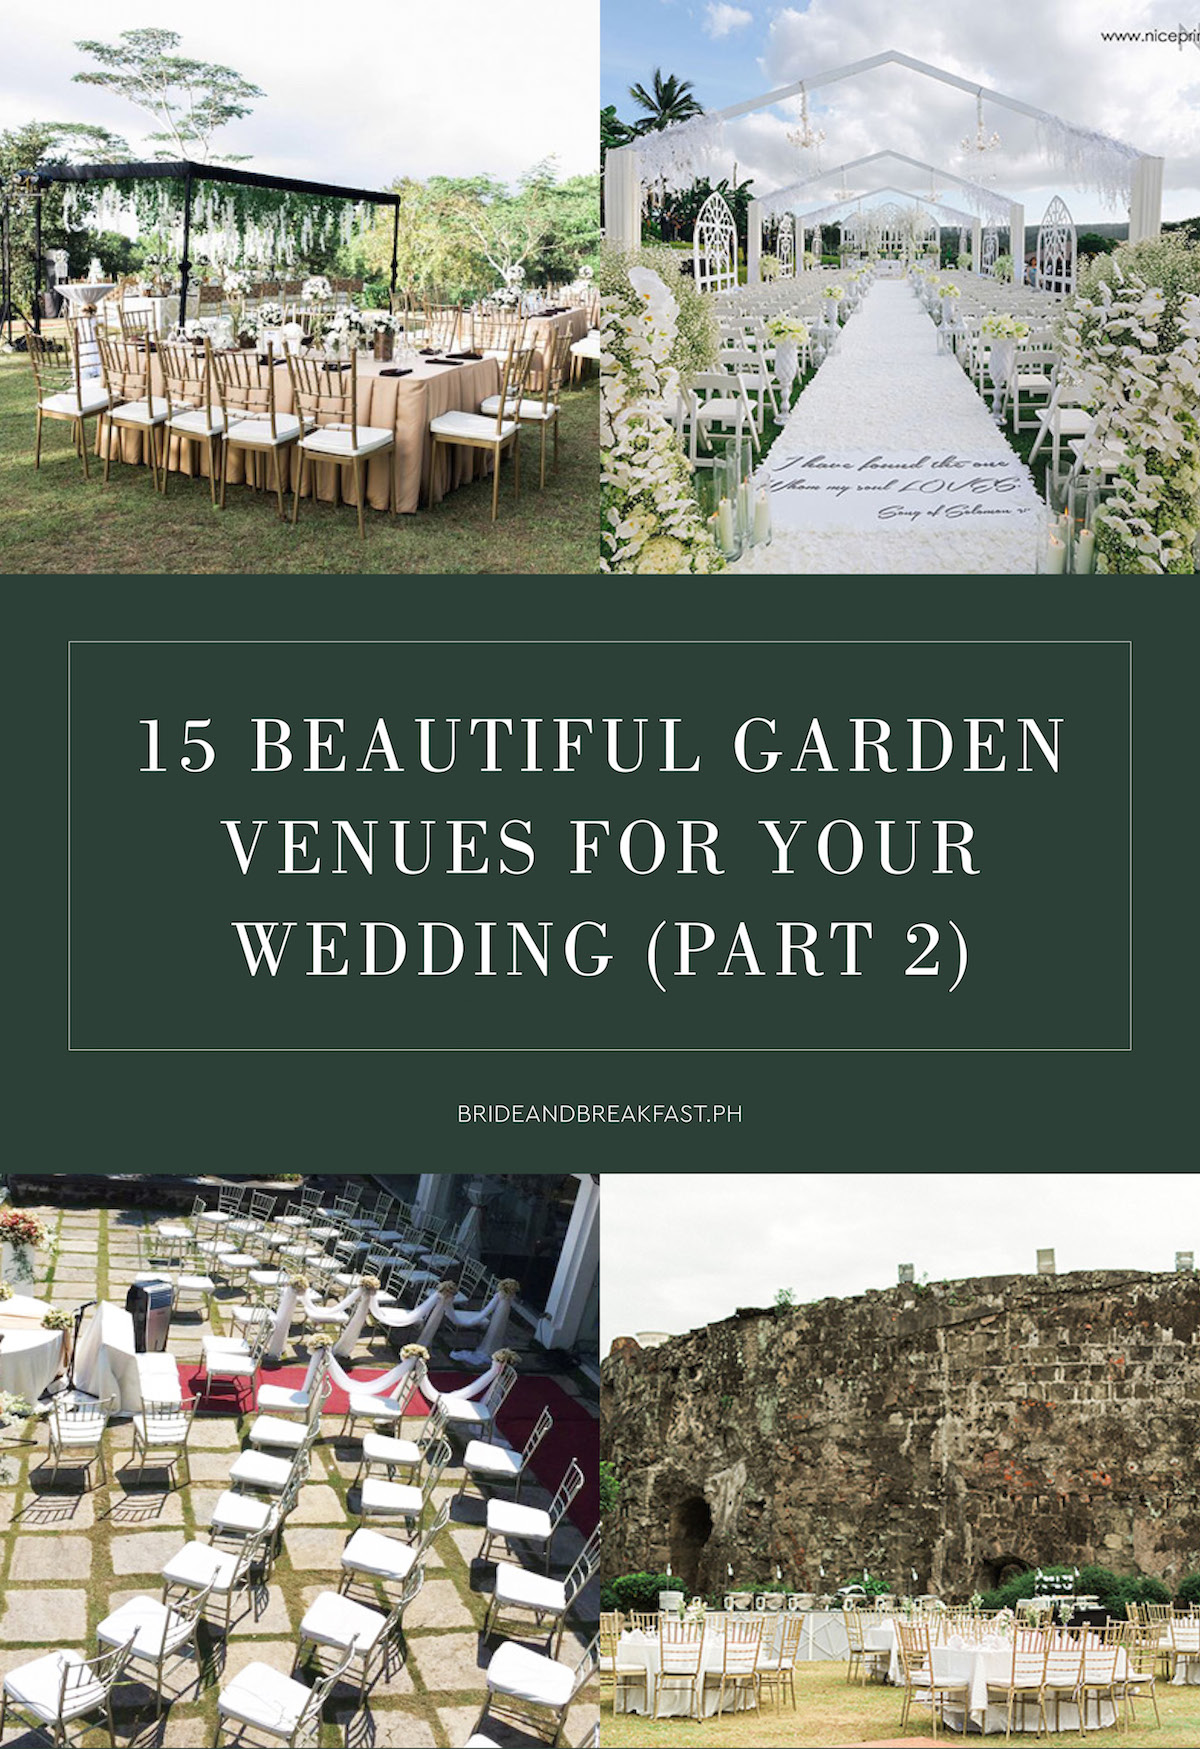 15 Beautiful Garden Venues for Your Wedding (Part 2)